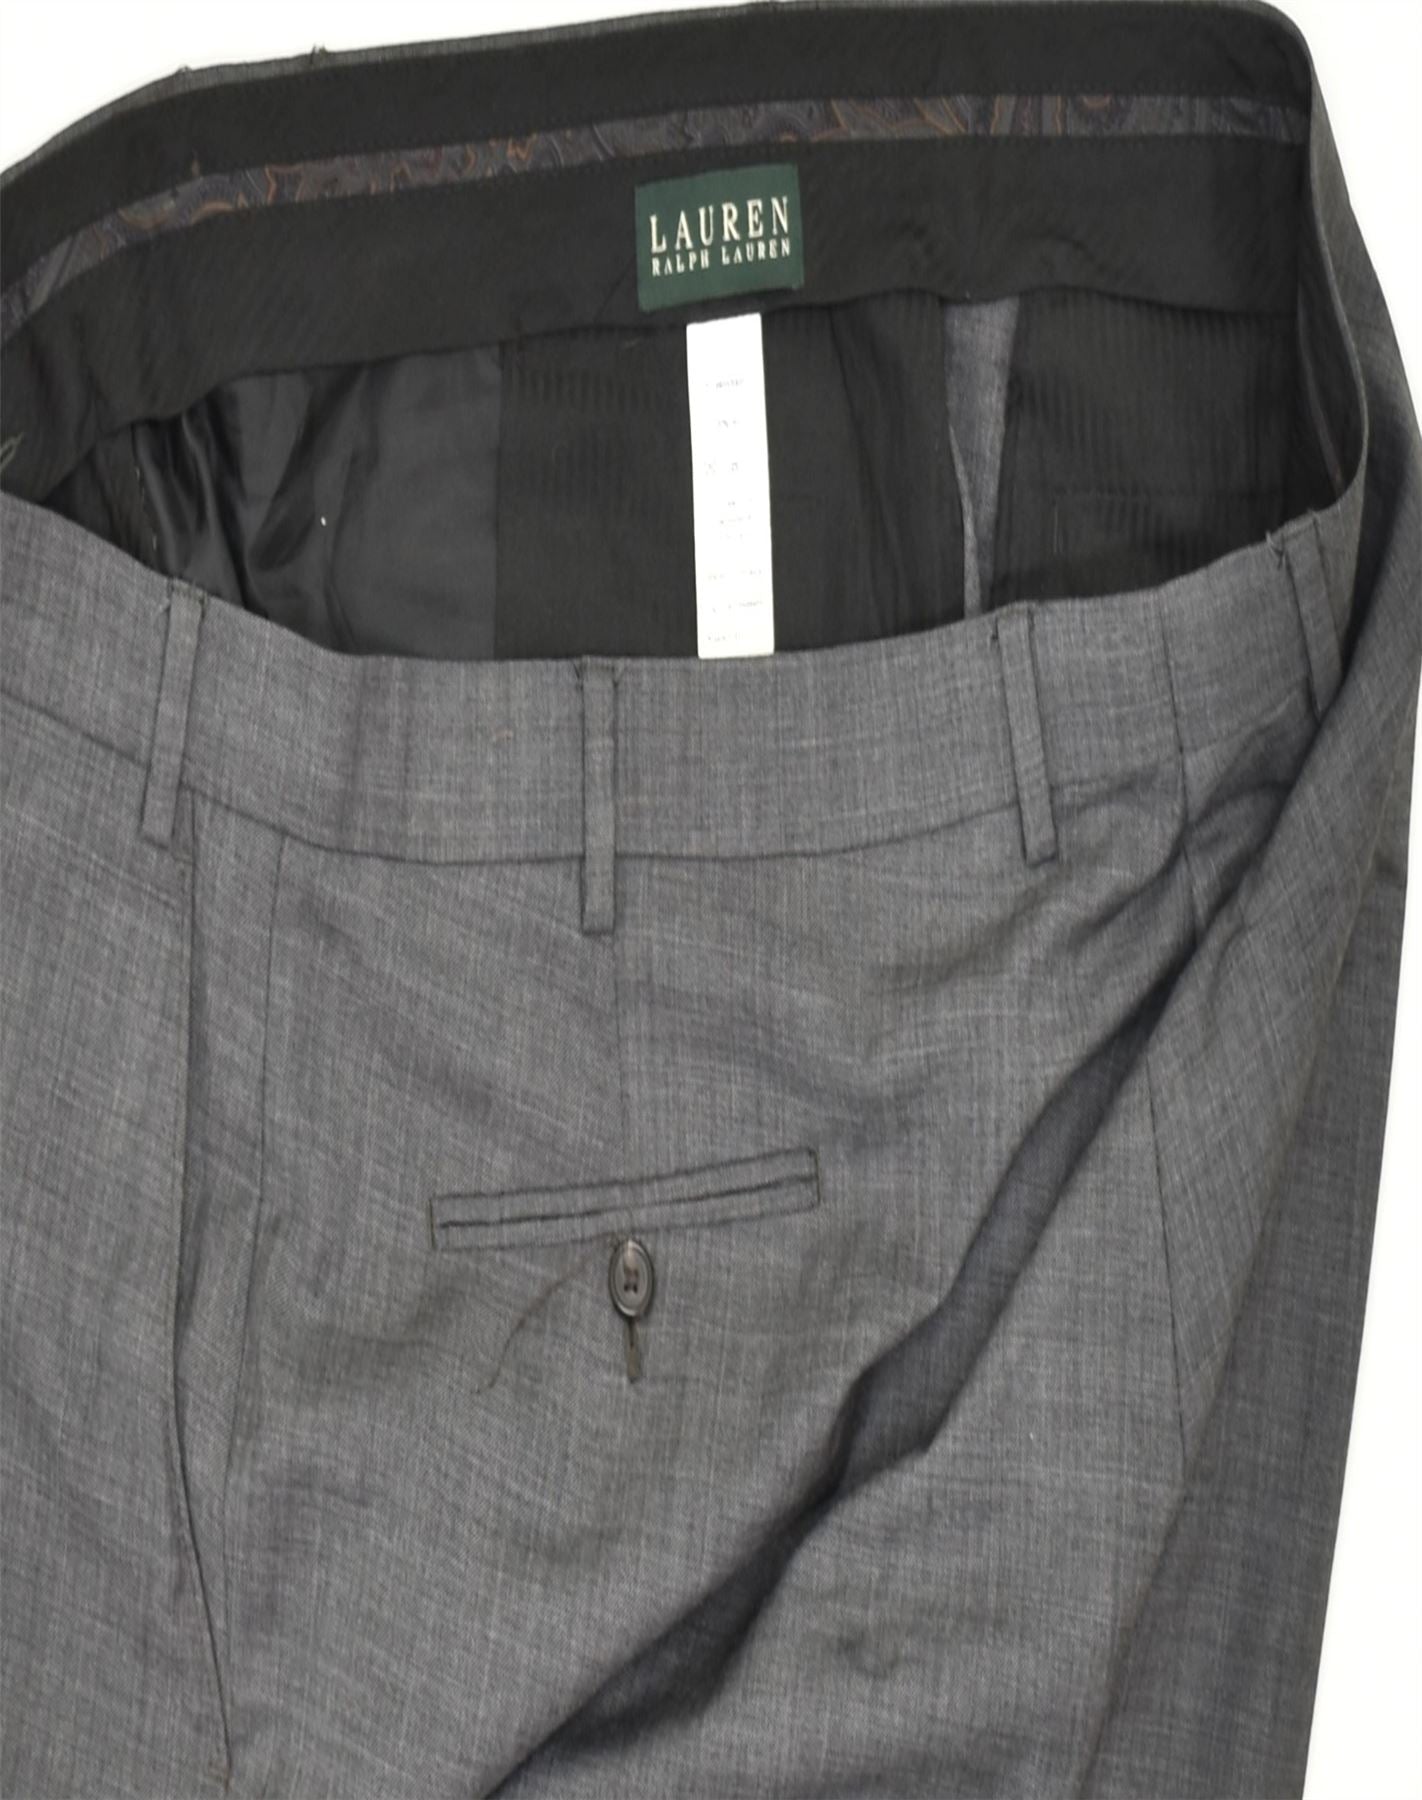 Polo Ralph Lauren Men's Trousers Corduroy W31 L34 Tg 45 Red New T6668 - Etsy